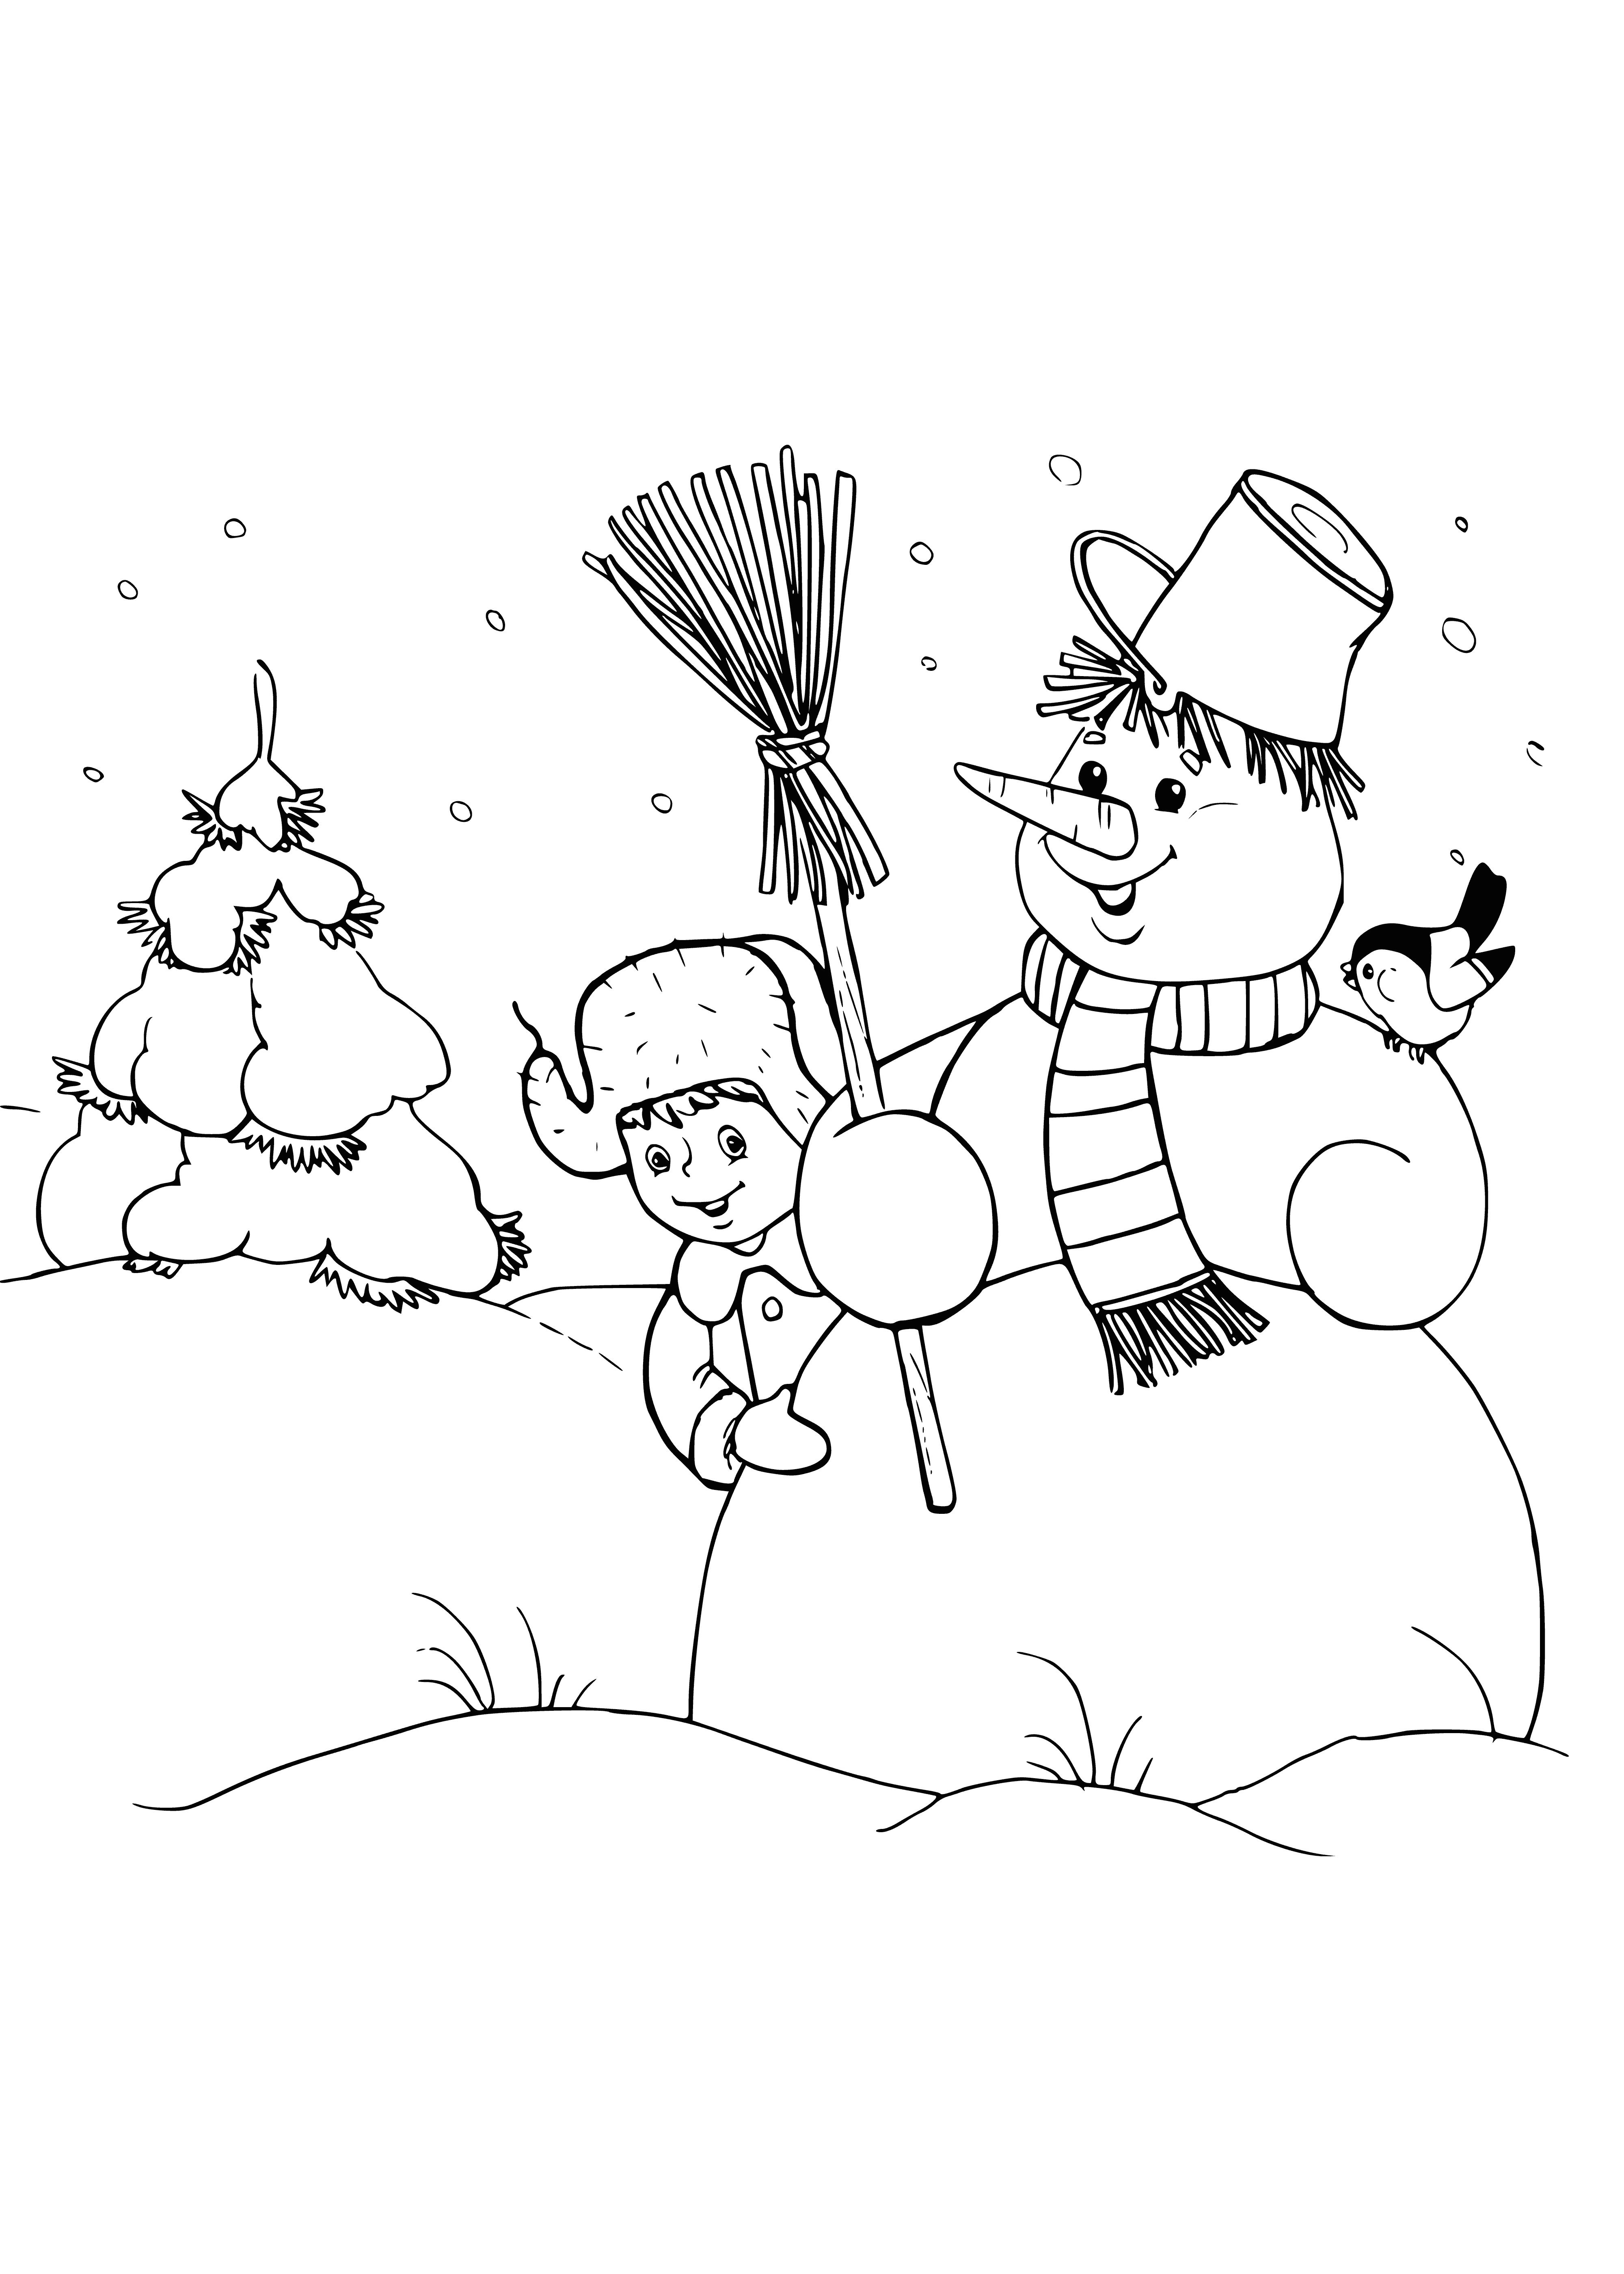 Sneeuwpop in winterbos kleurplaat